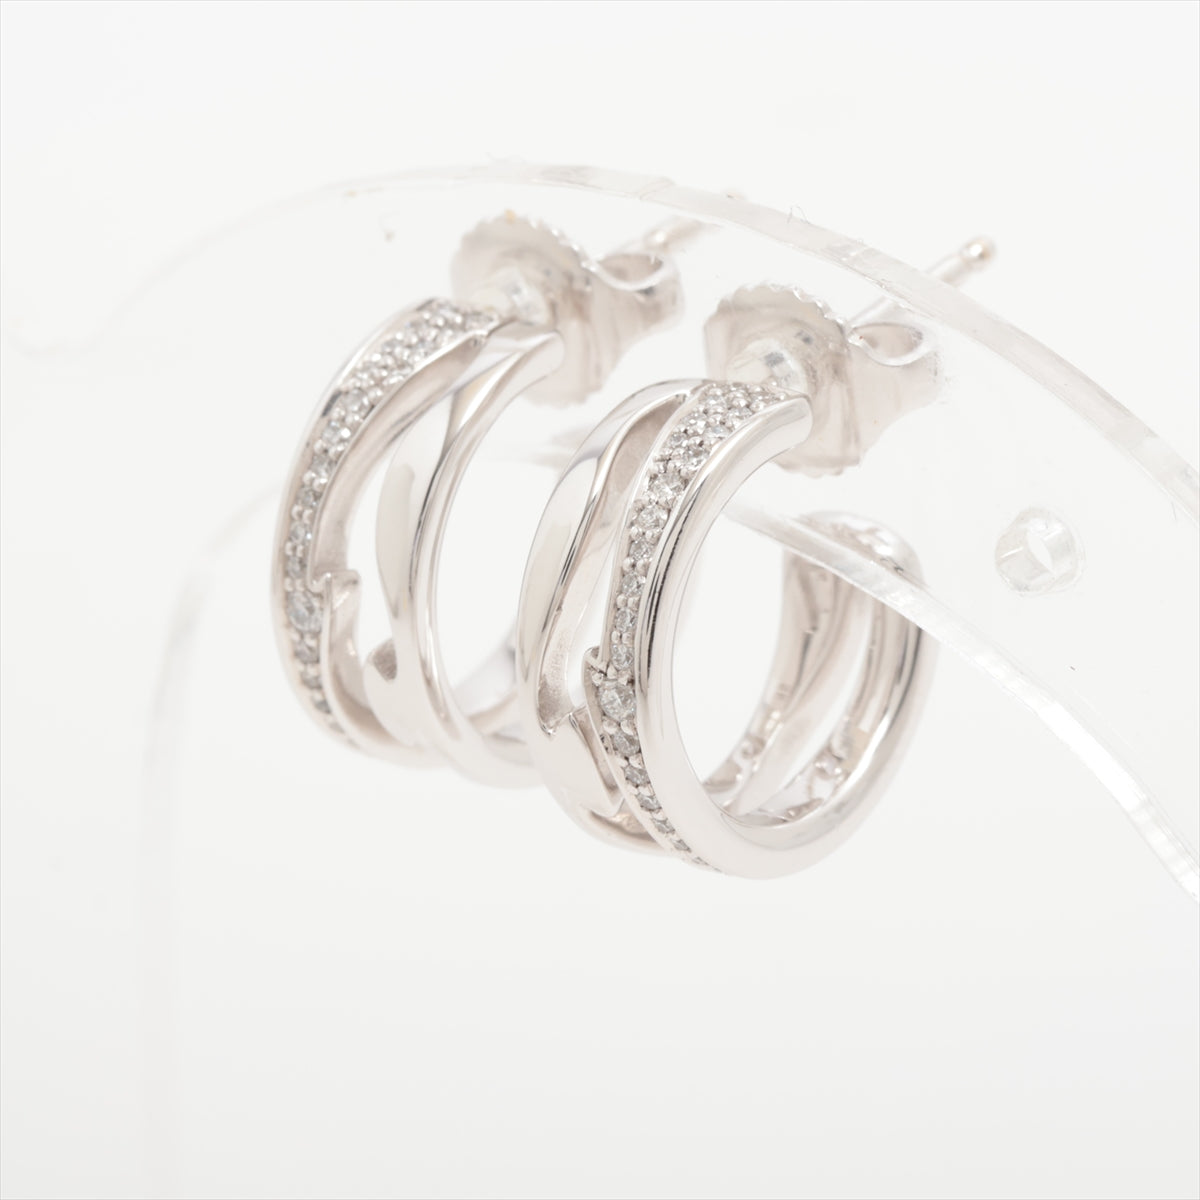 Georg Jensen Fusion Piercing jewelry (for both ears) 750 5.2g Guaranteed diamond